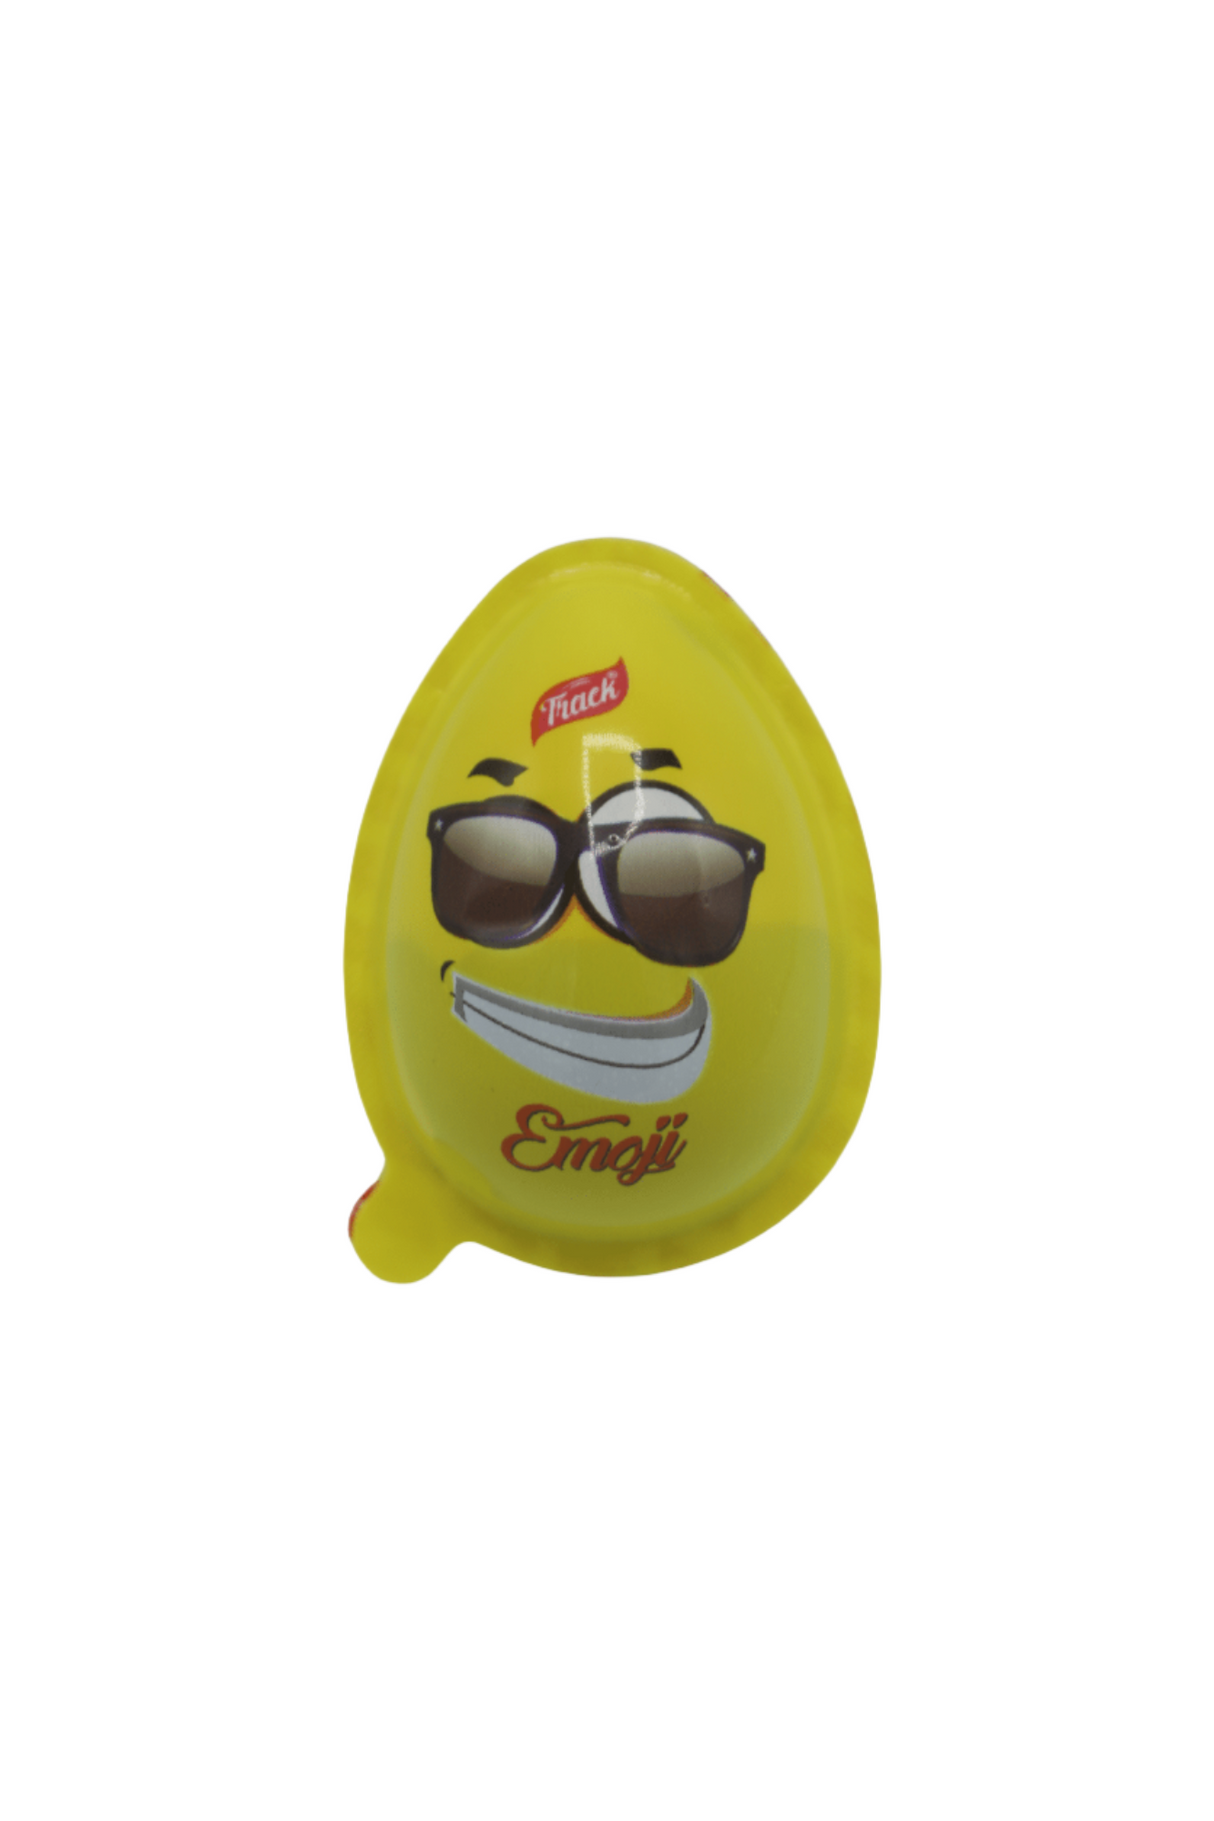 track emoji egg candy 20g